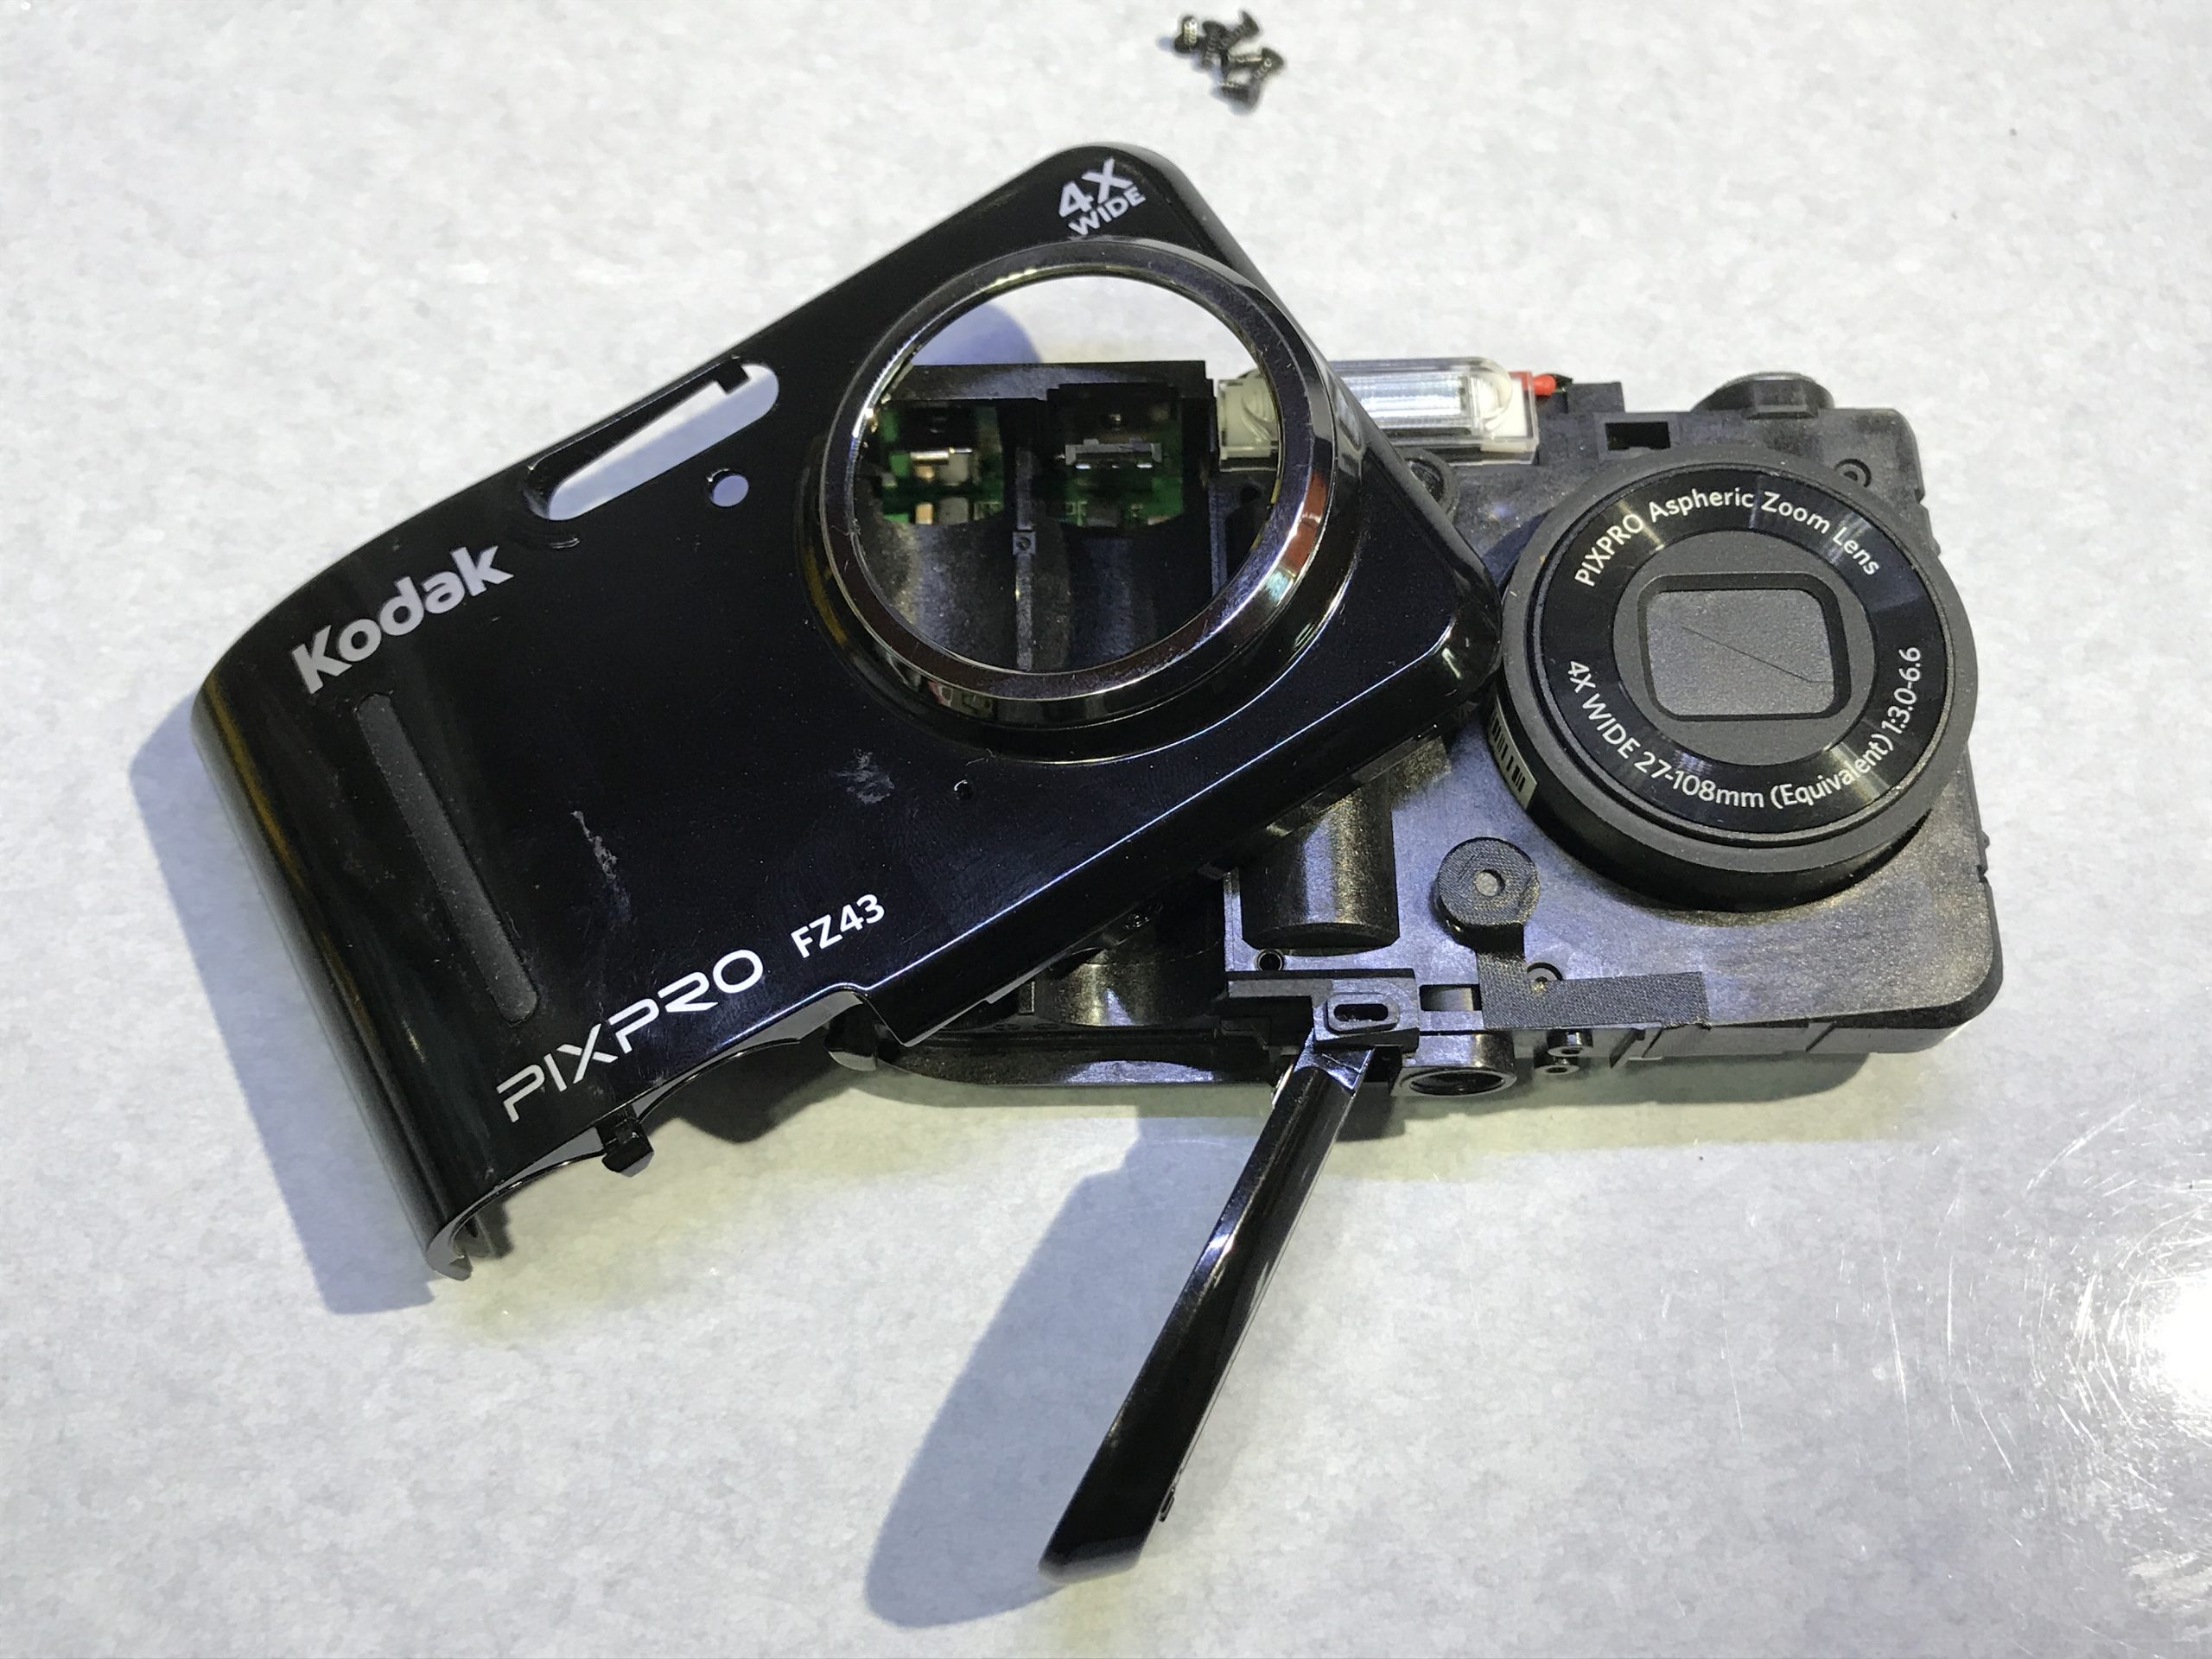 kodakのデジカメ、pixpro fz43分解 | にしきの理科準備室